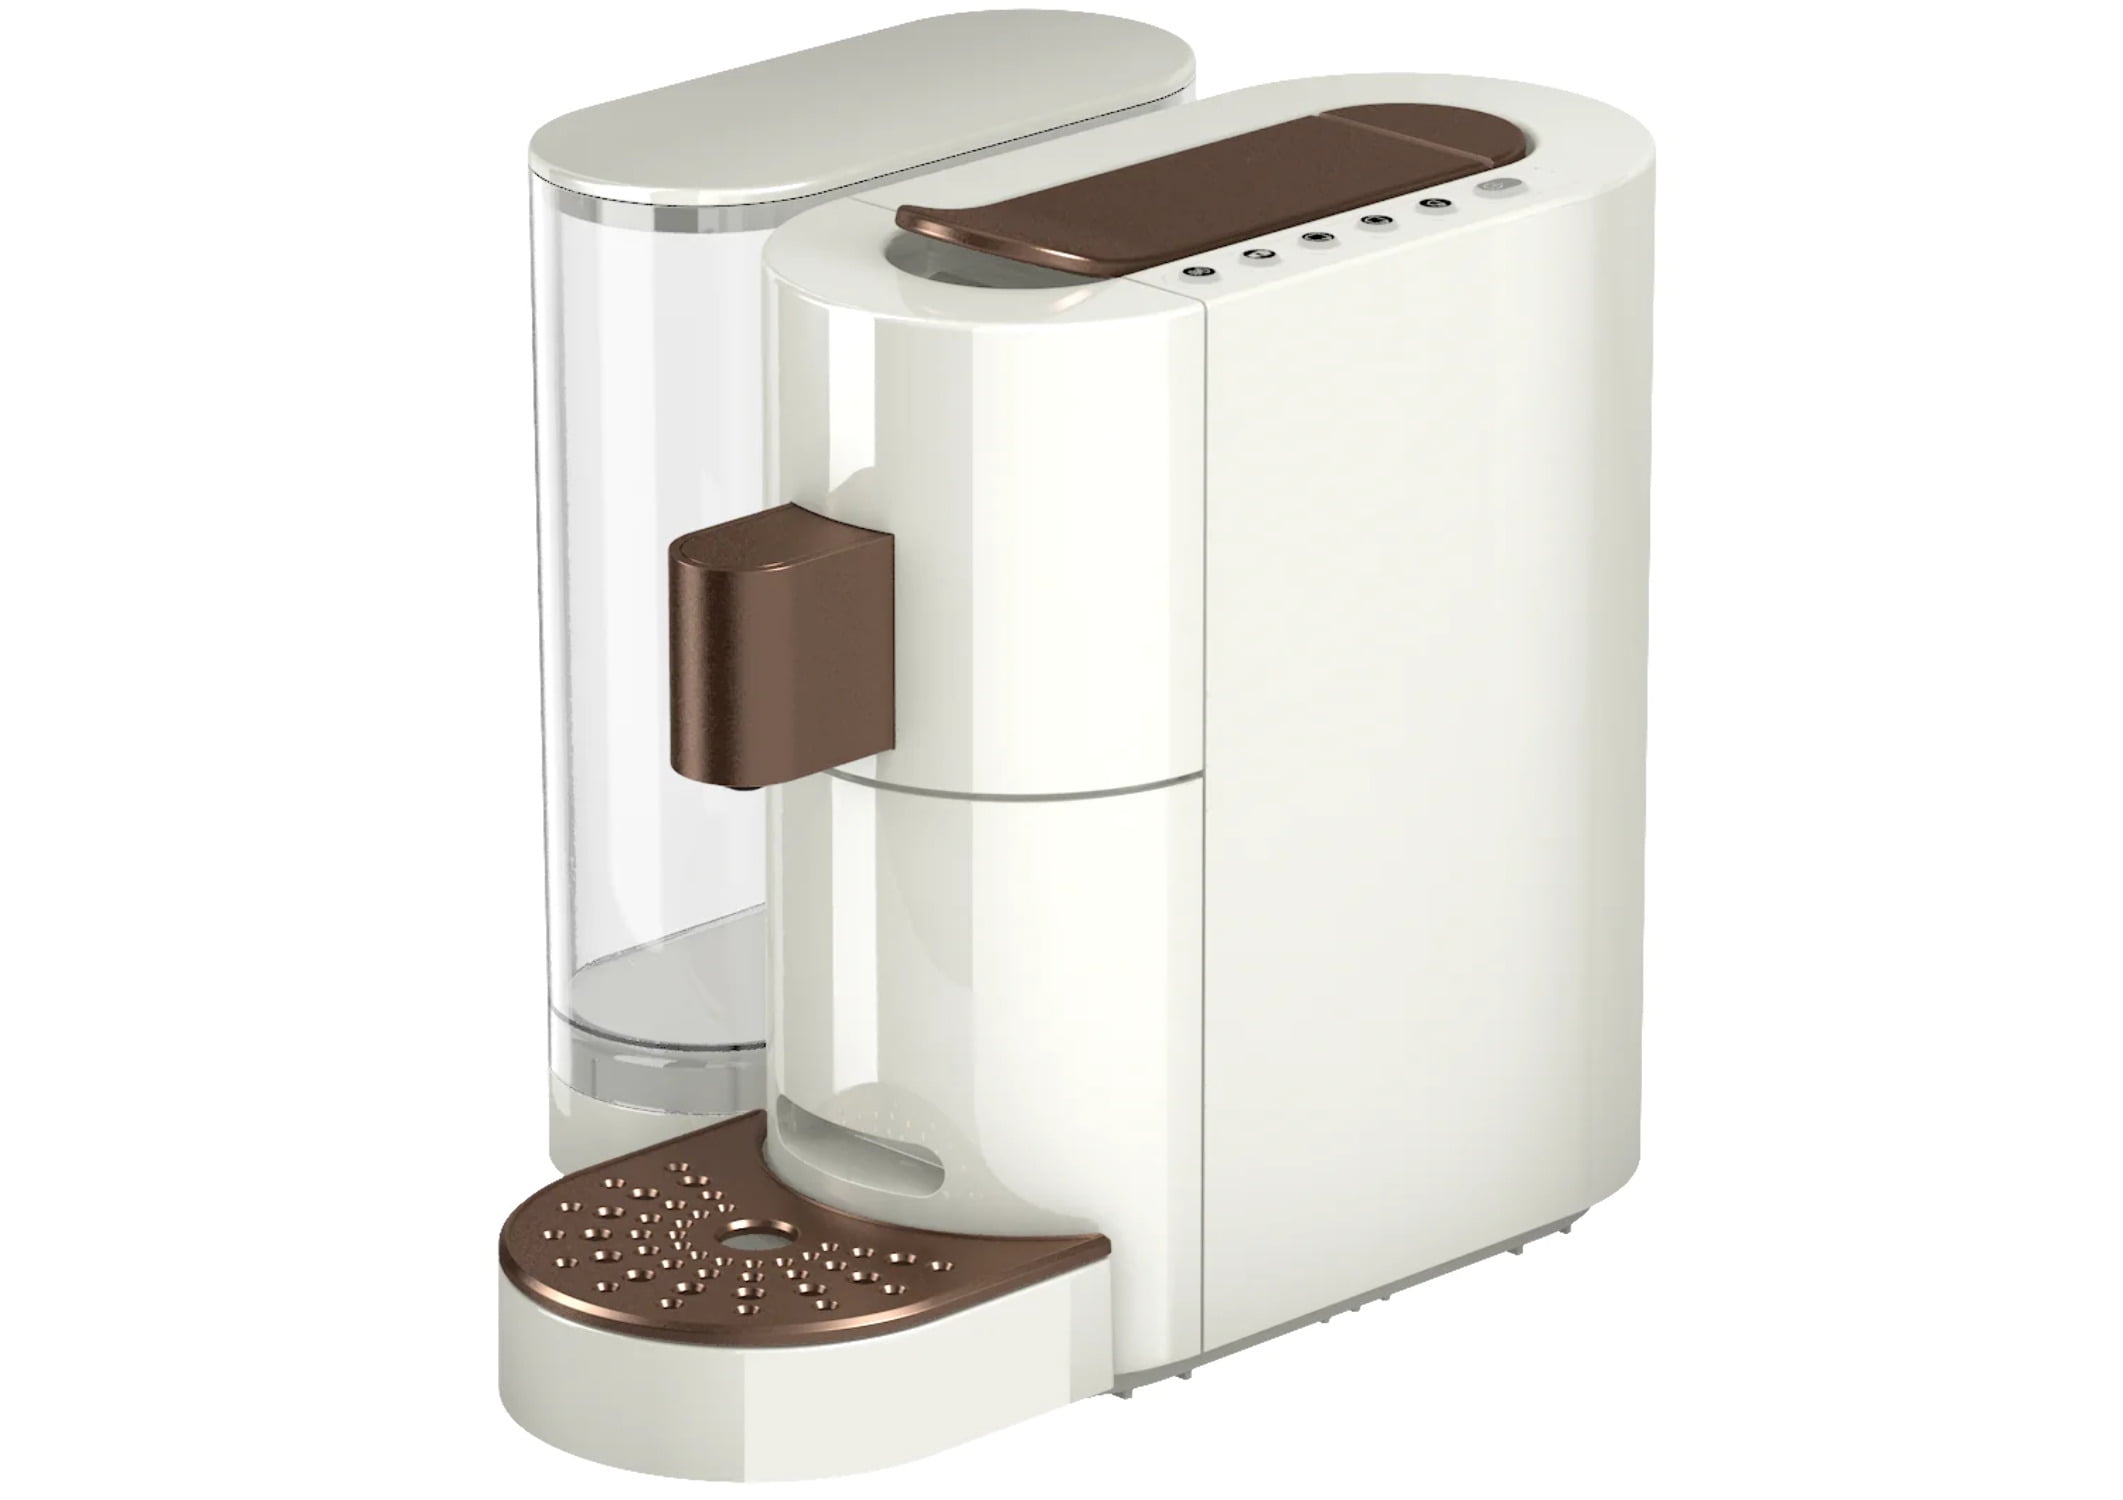  K-FEE® ONE Single Serve Coffee and Espresso Machine  (Black/Copper)